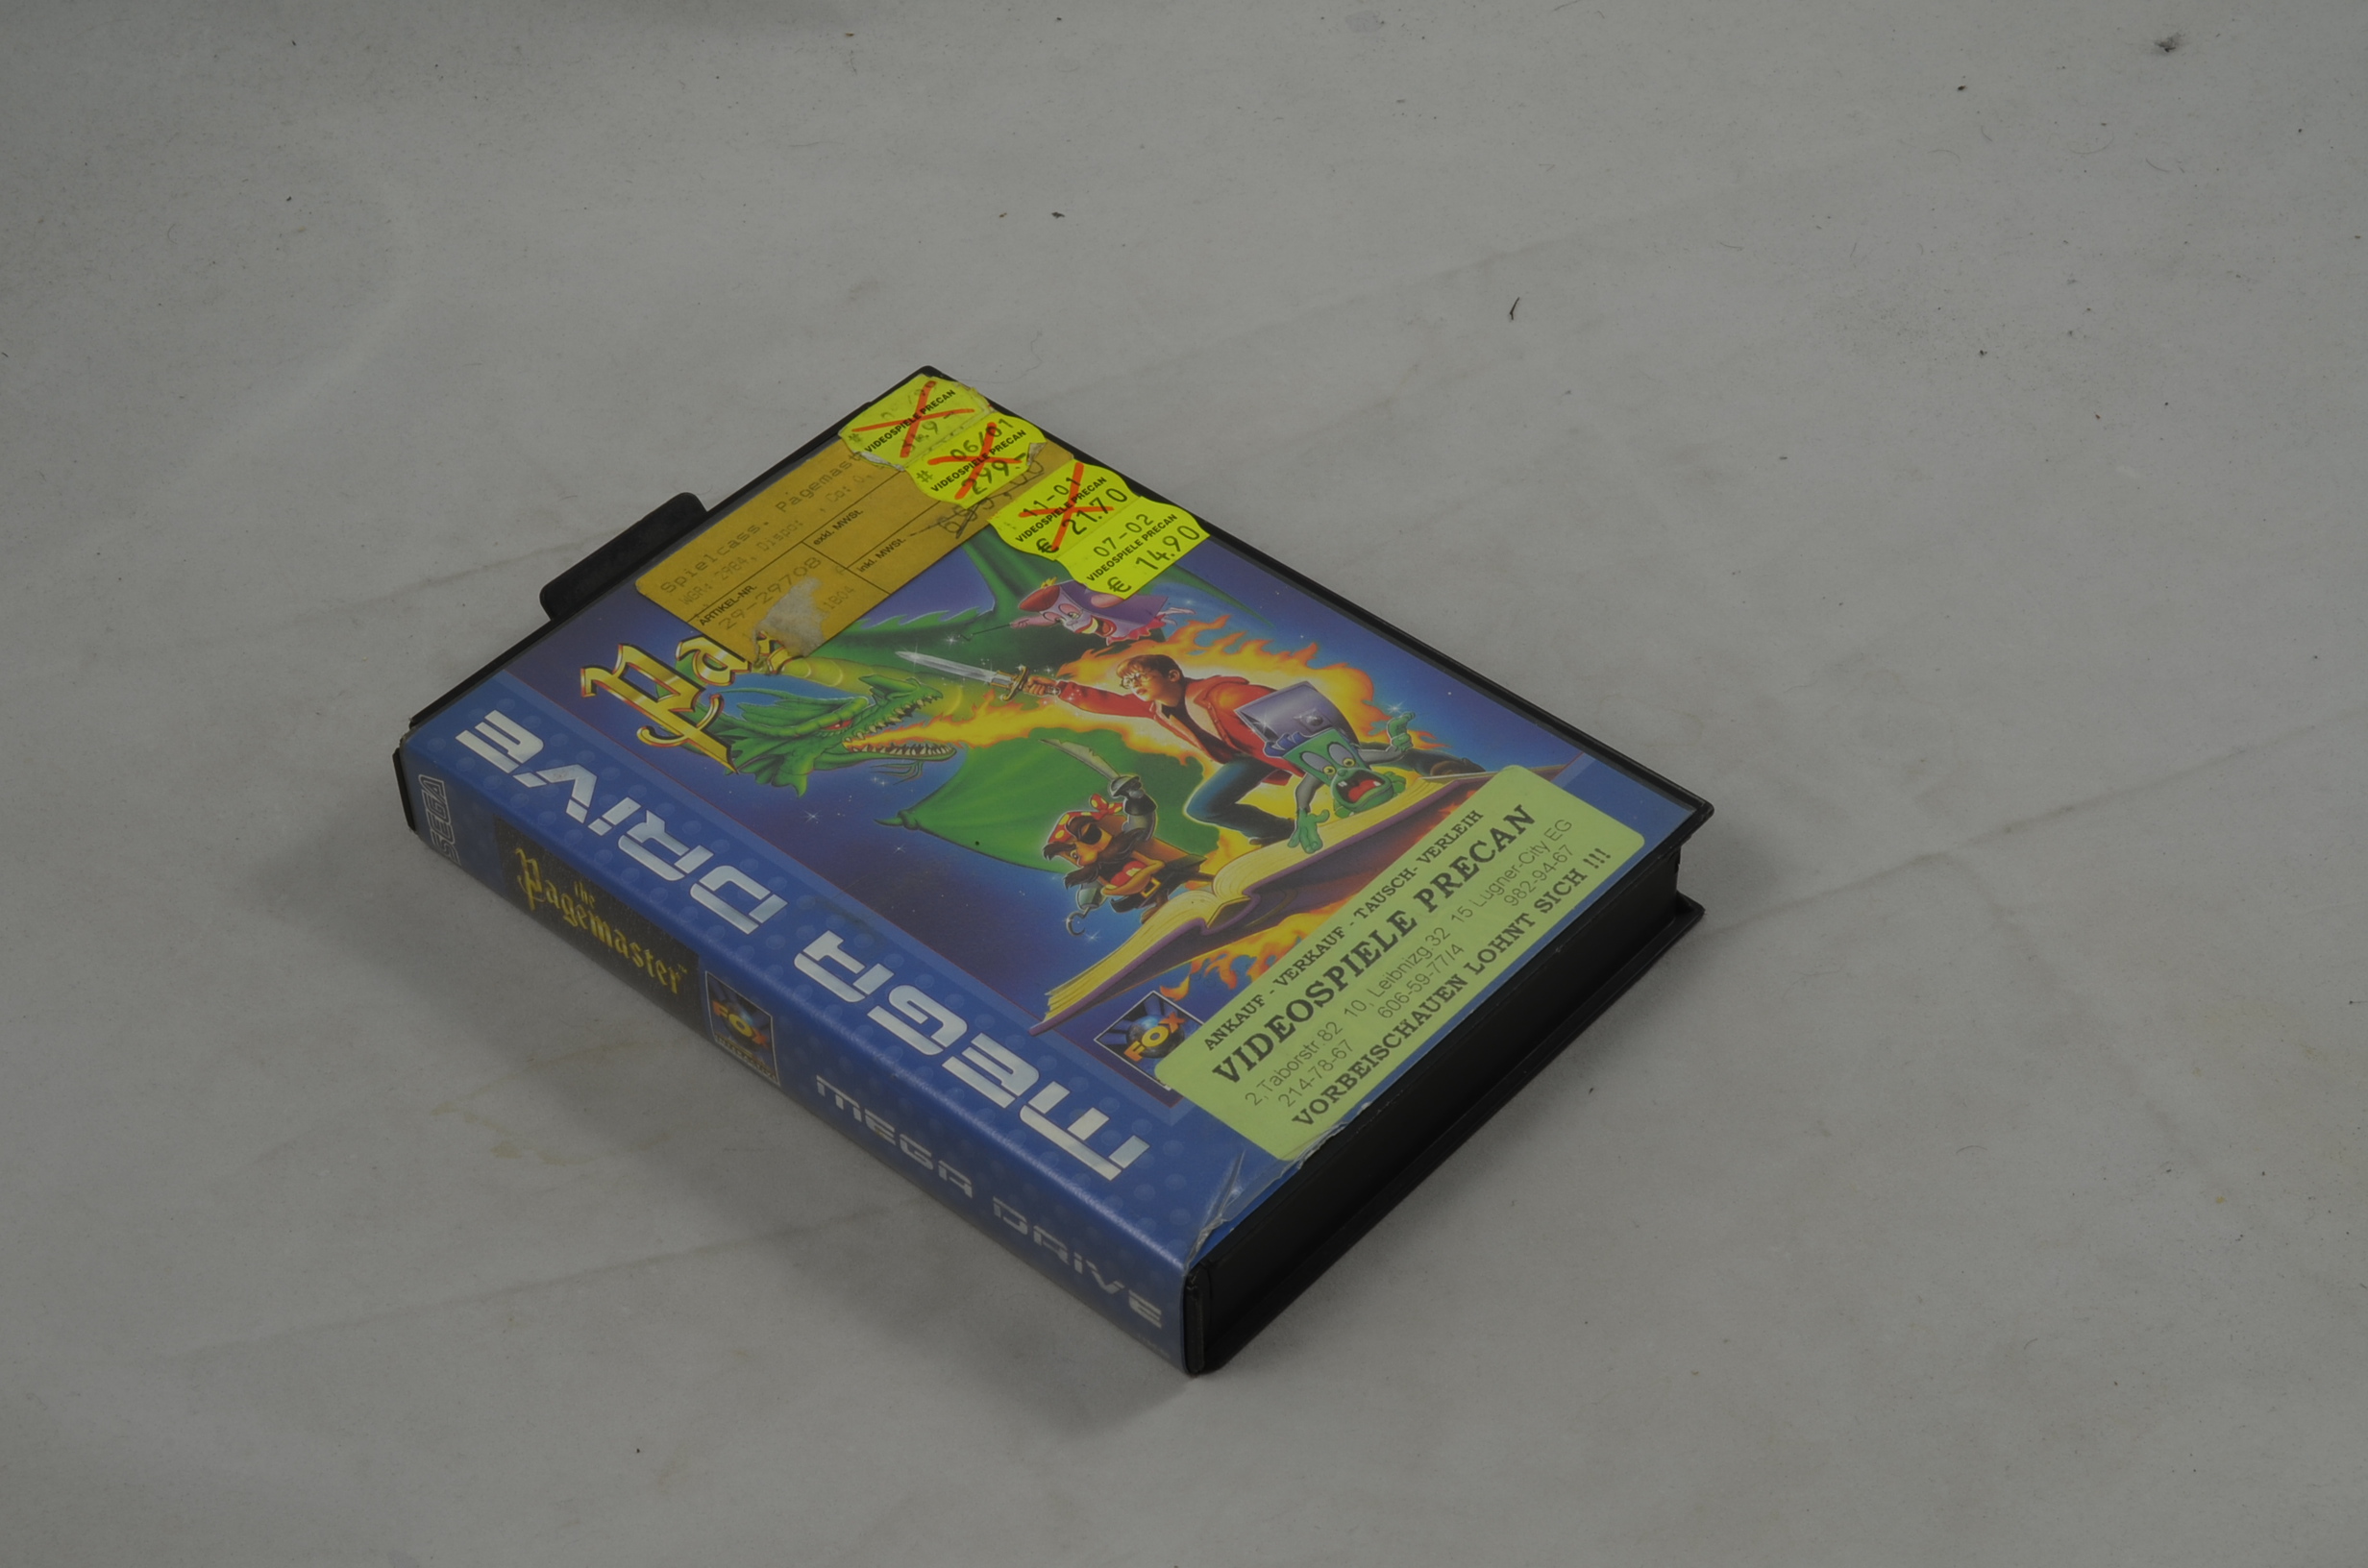 Produktbild von The Pagemaster Sega Mega Drive Spiel CIB (gut)